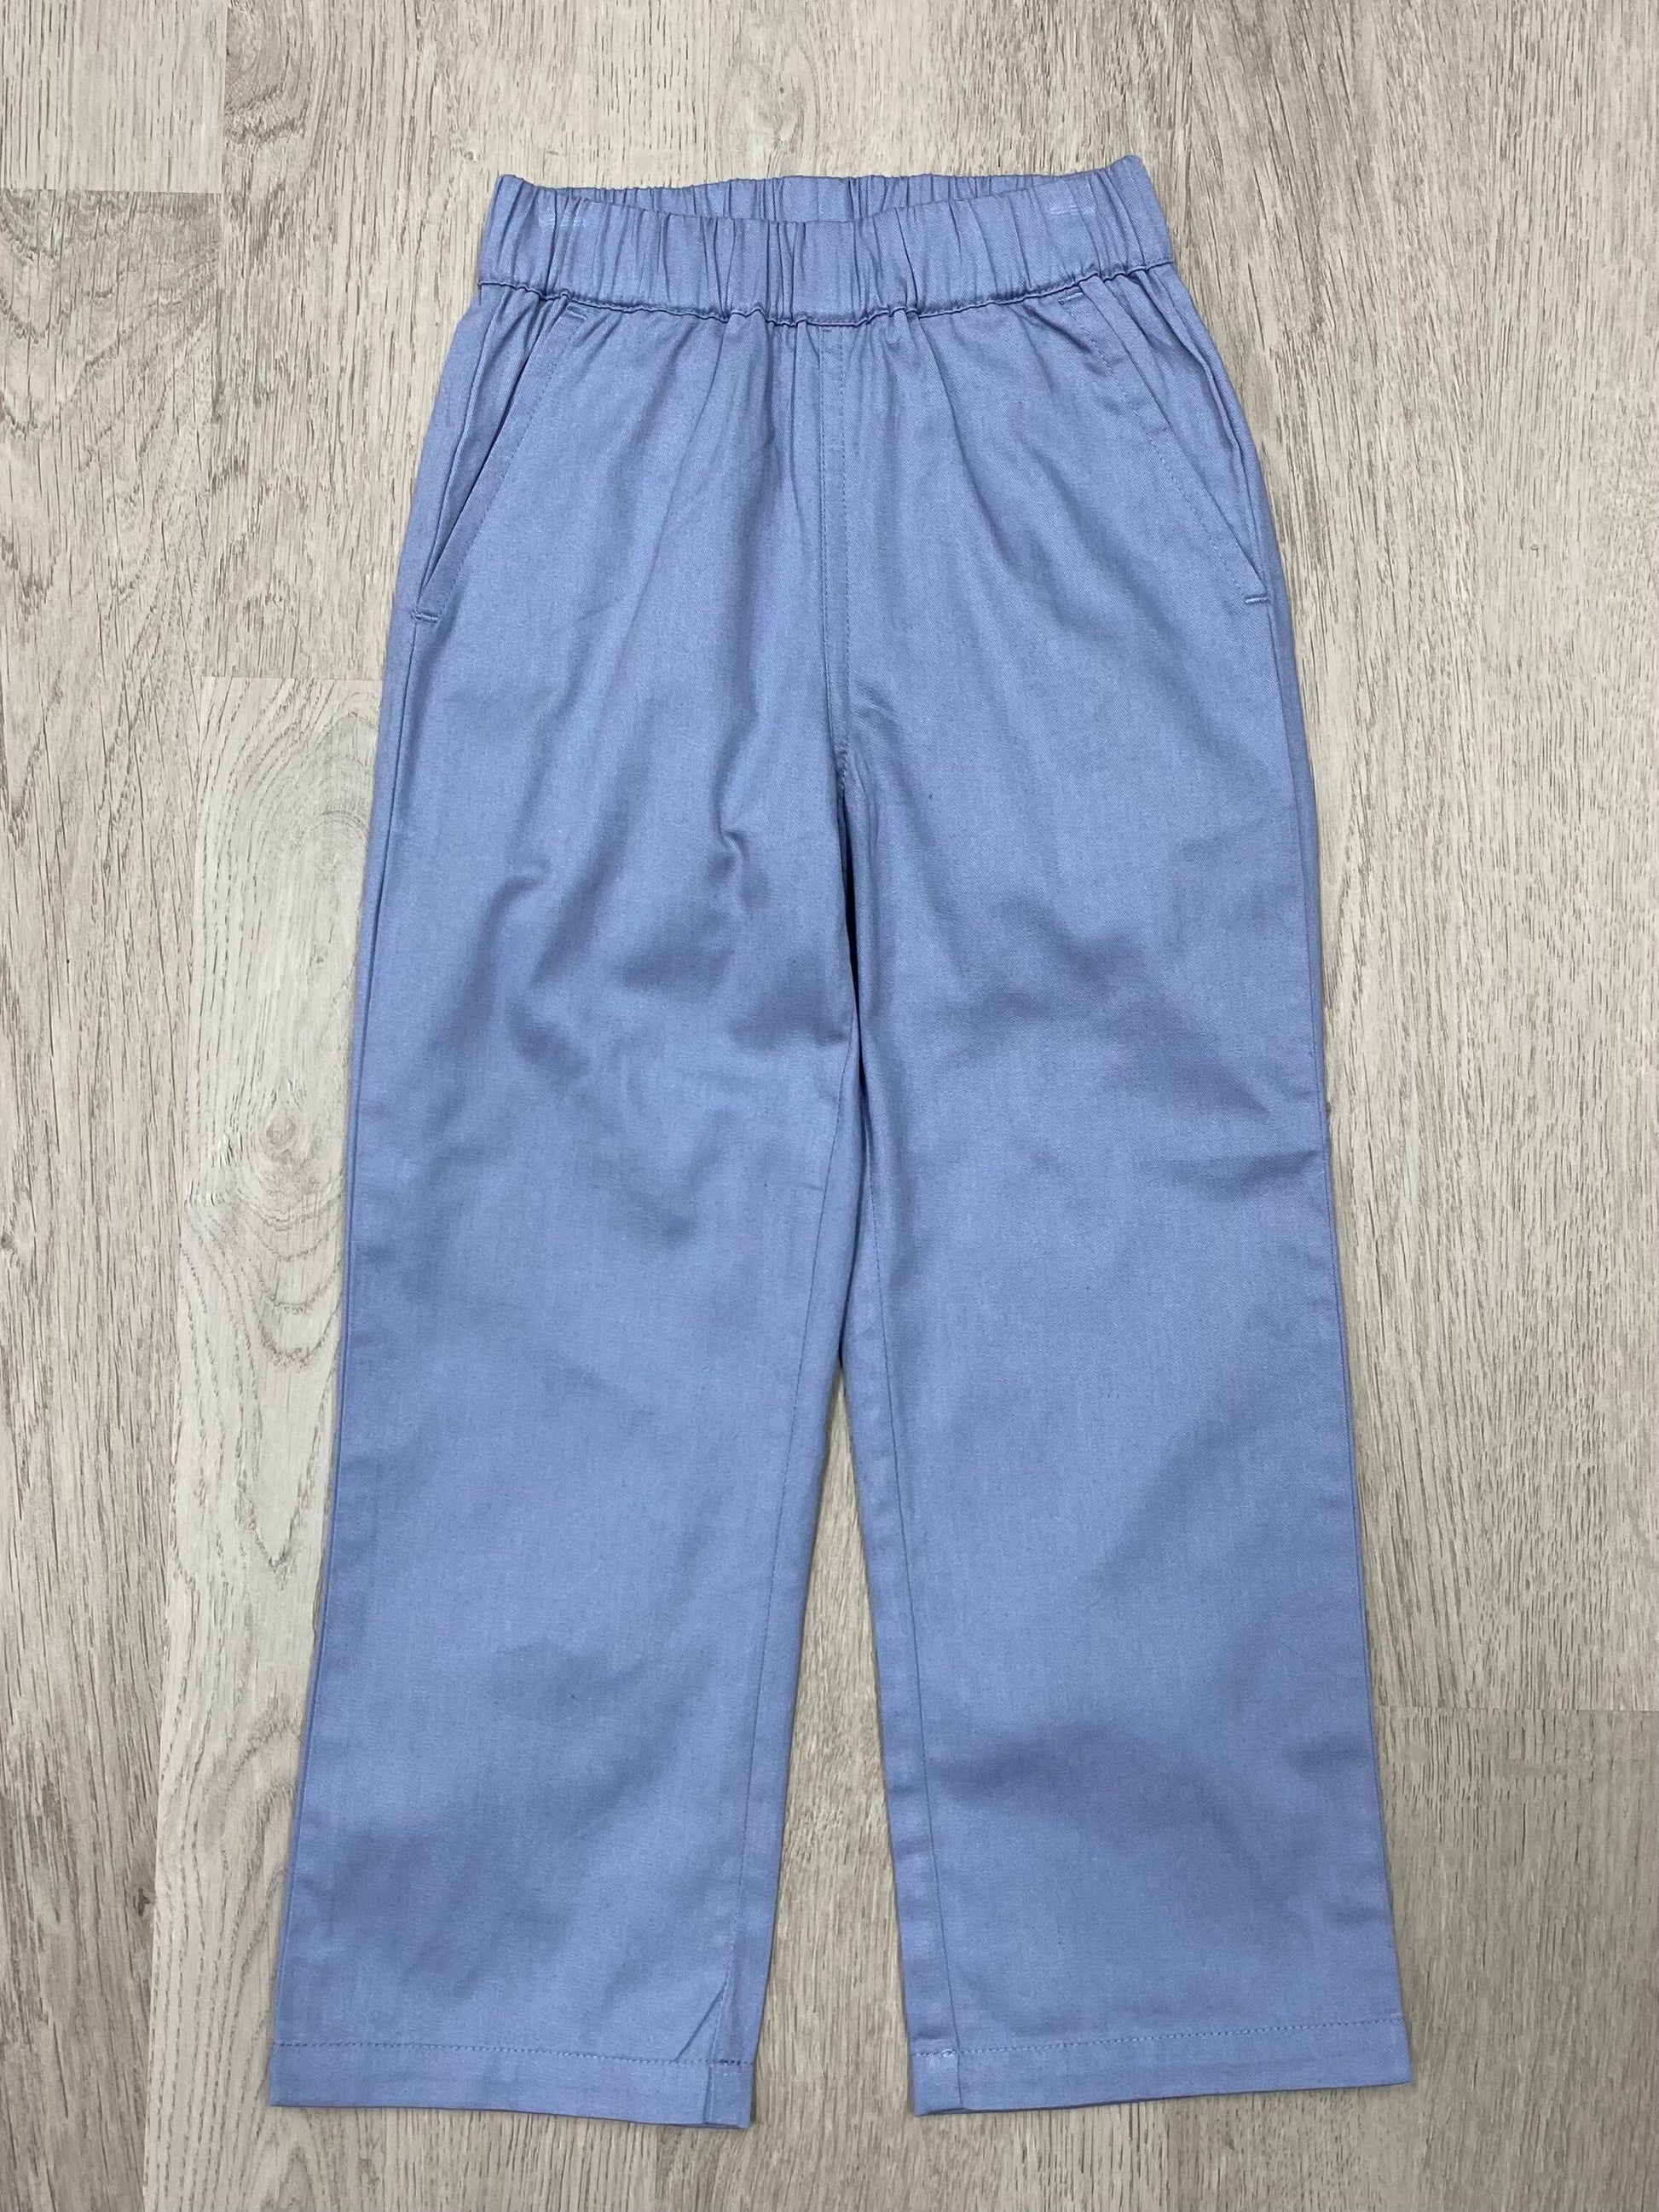 Elastic Pants - Infinity Blue Boys Pants Southbound   